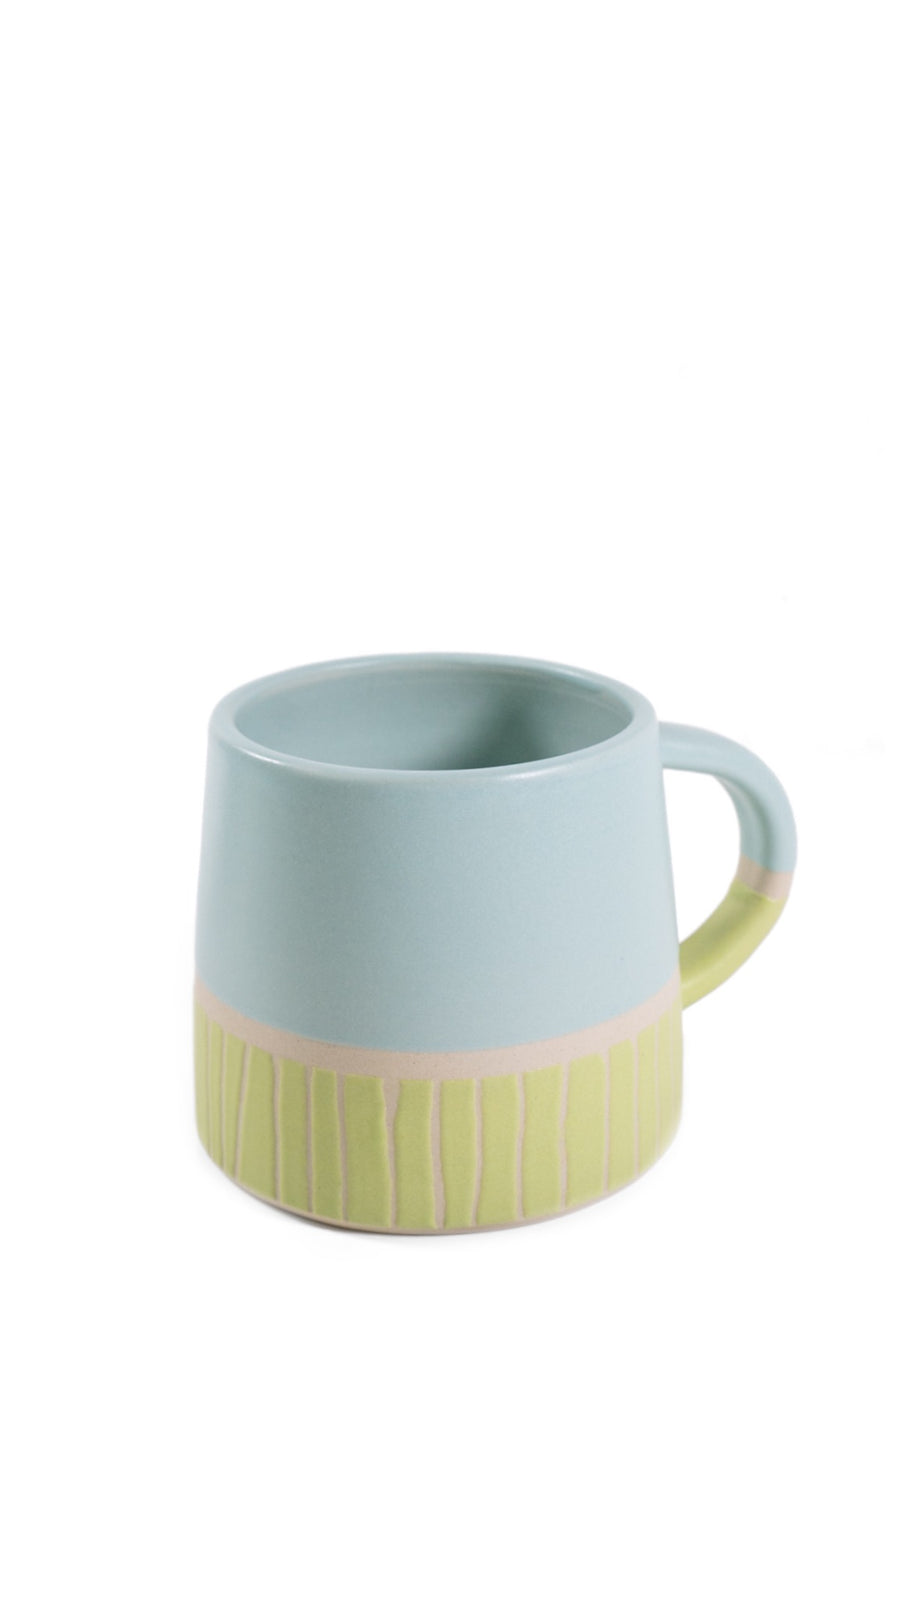 Mug w/Vertical Stripes by Theresa Arrison